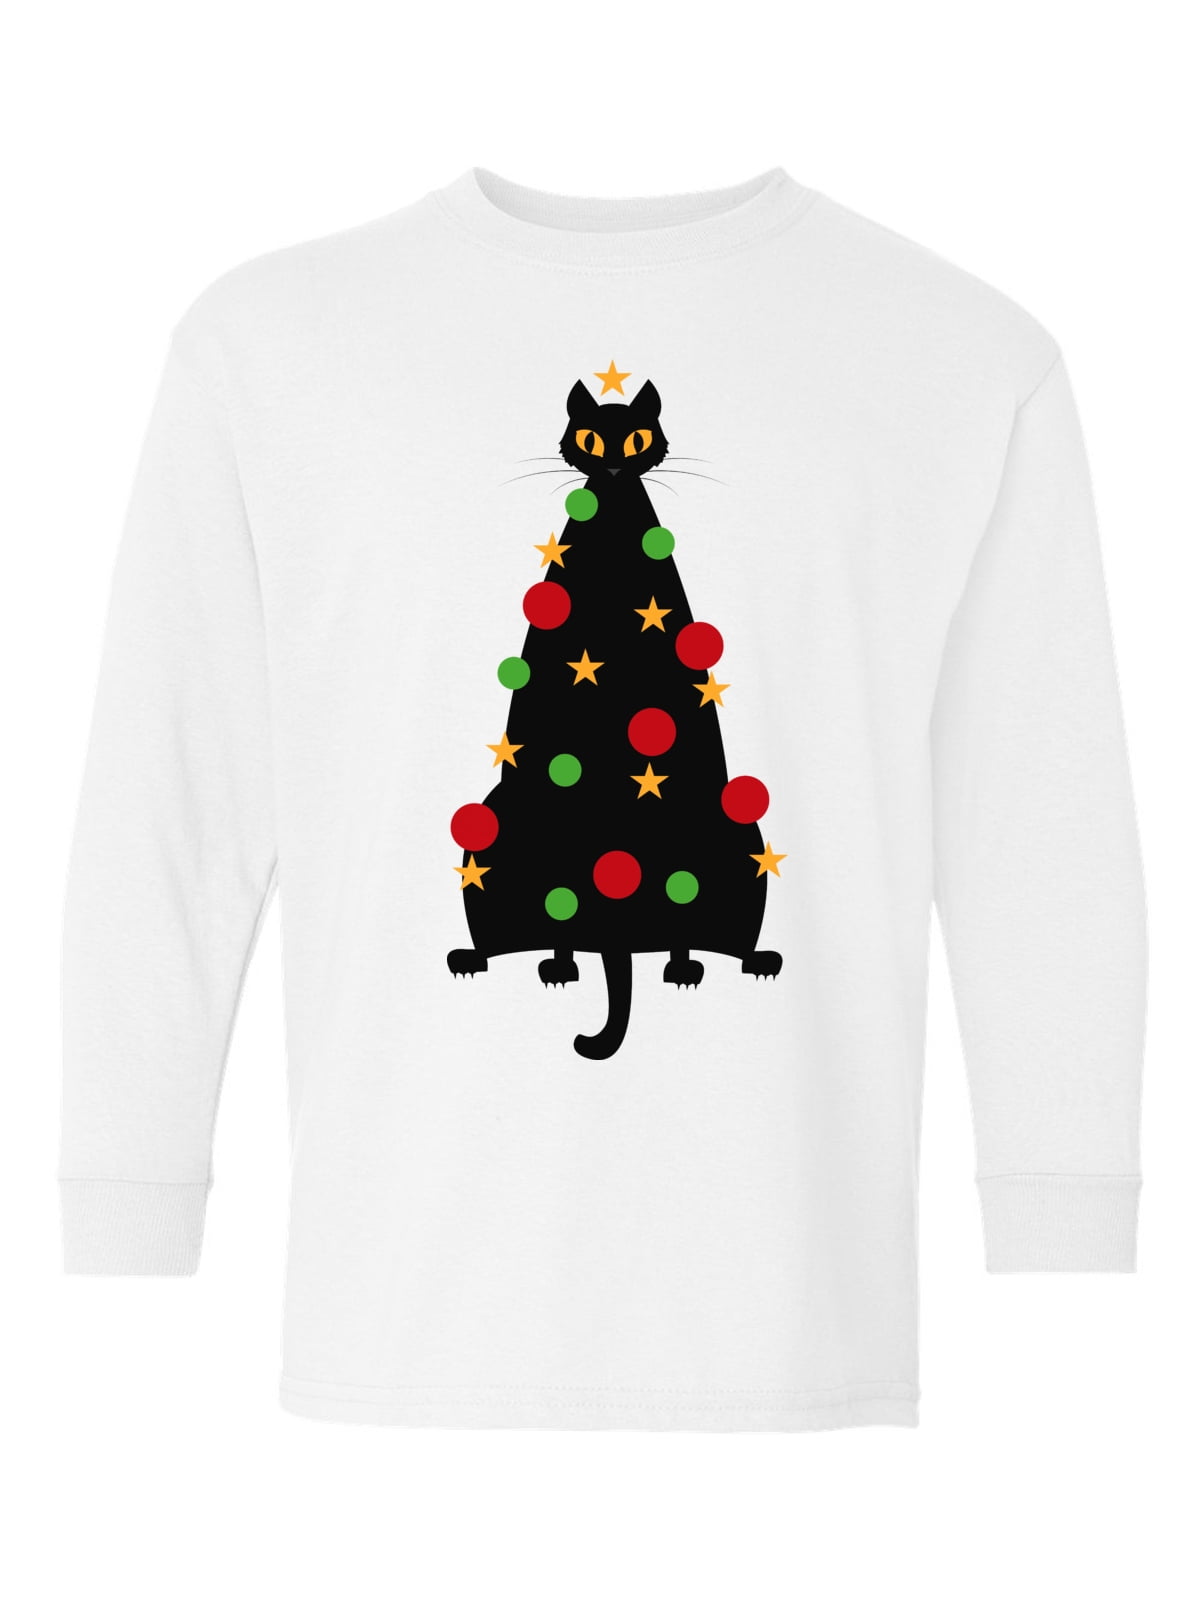 Girls Christmas Tree Top T Shirt Xmas Long Sleeve Size 2 3 4 5 years 